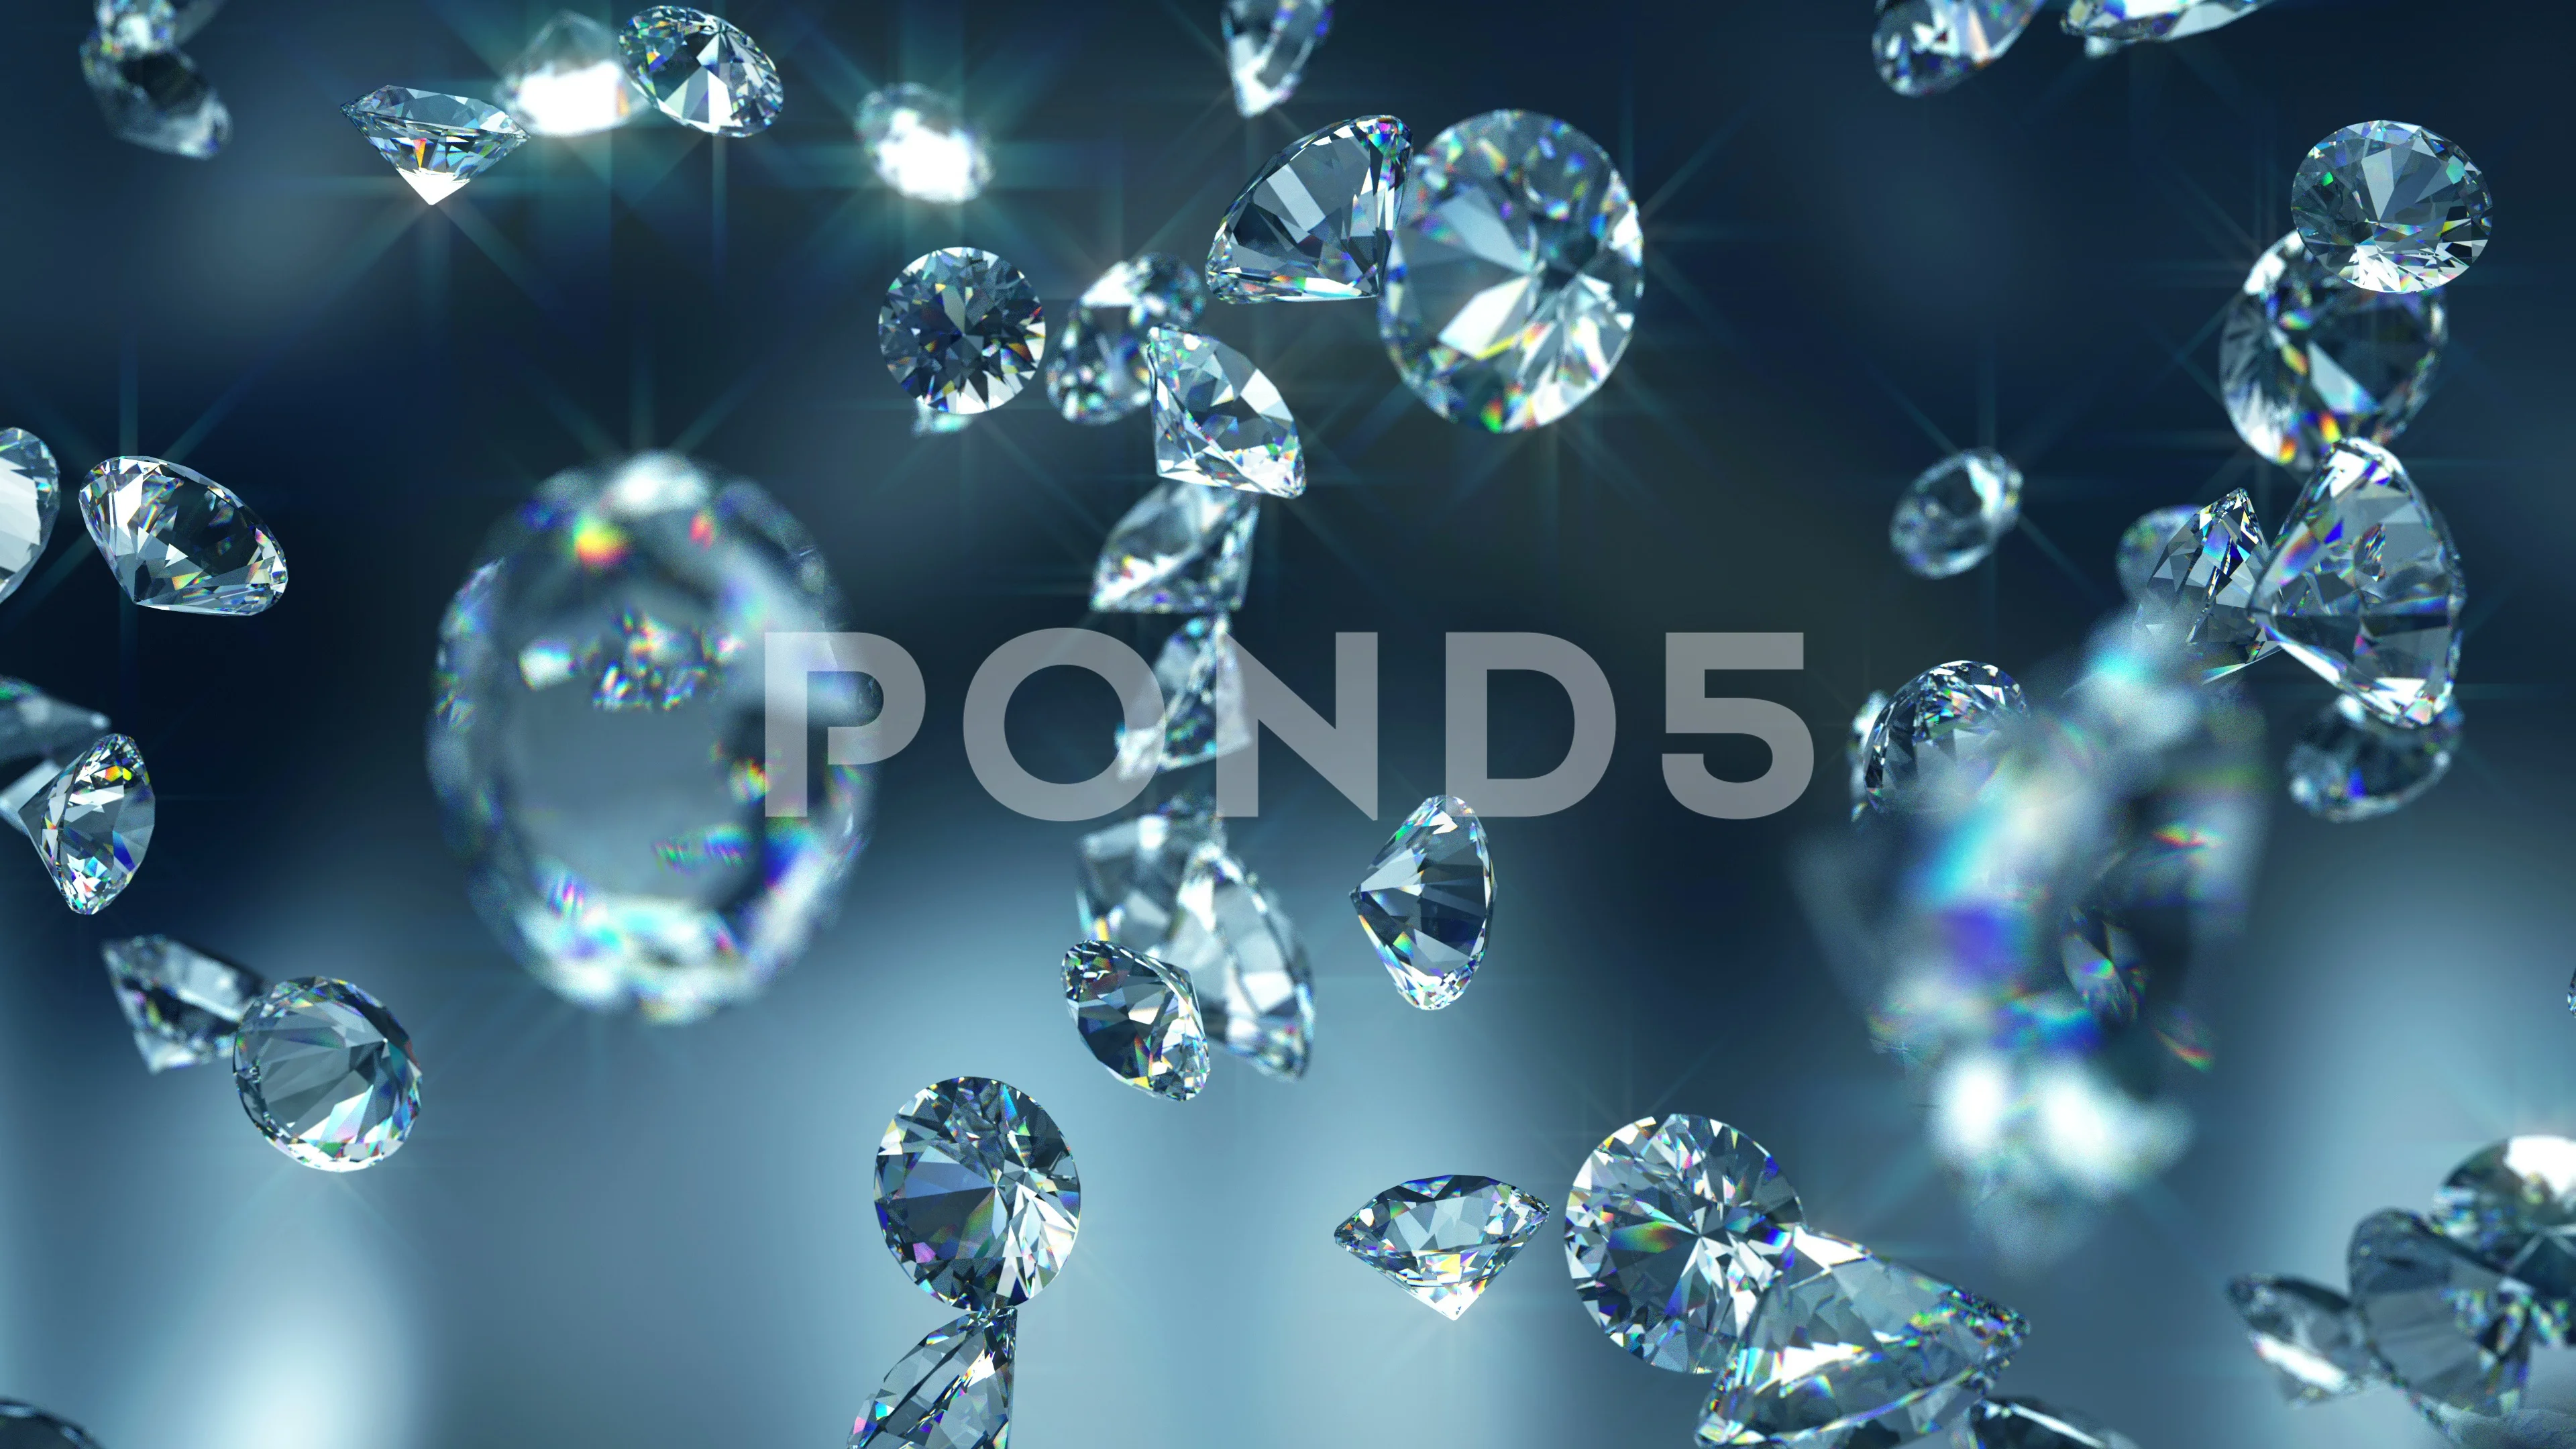 Help diamonds falling off : r/diamondpainting